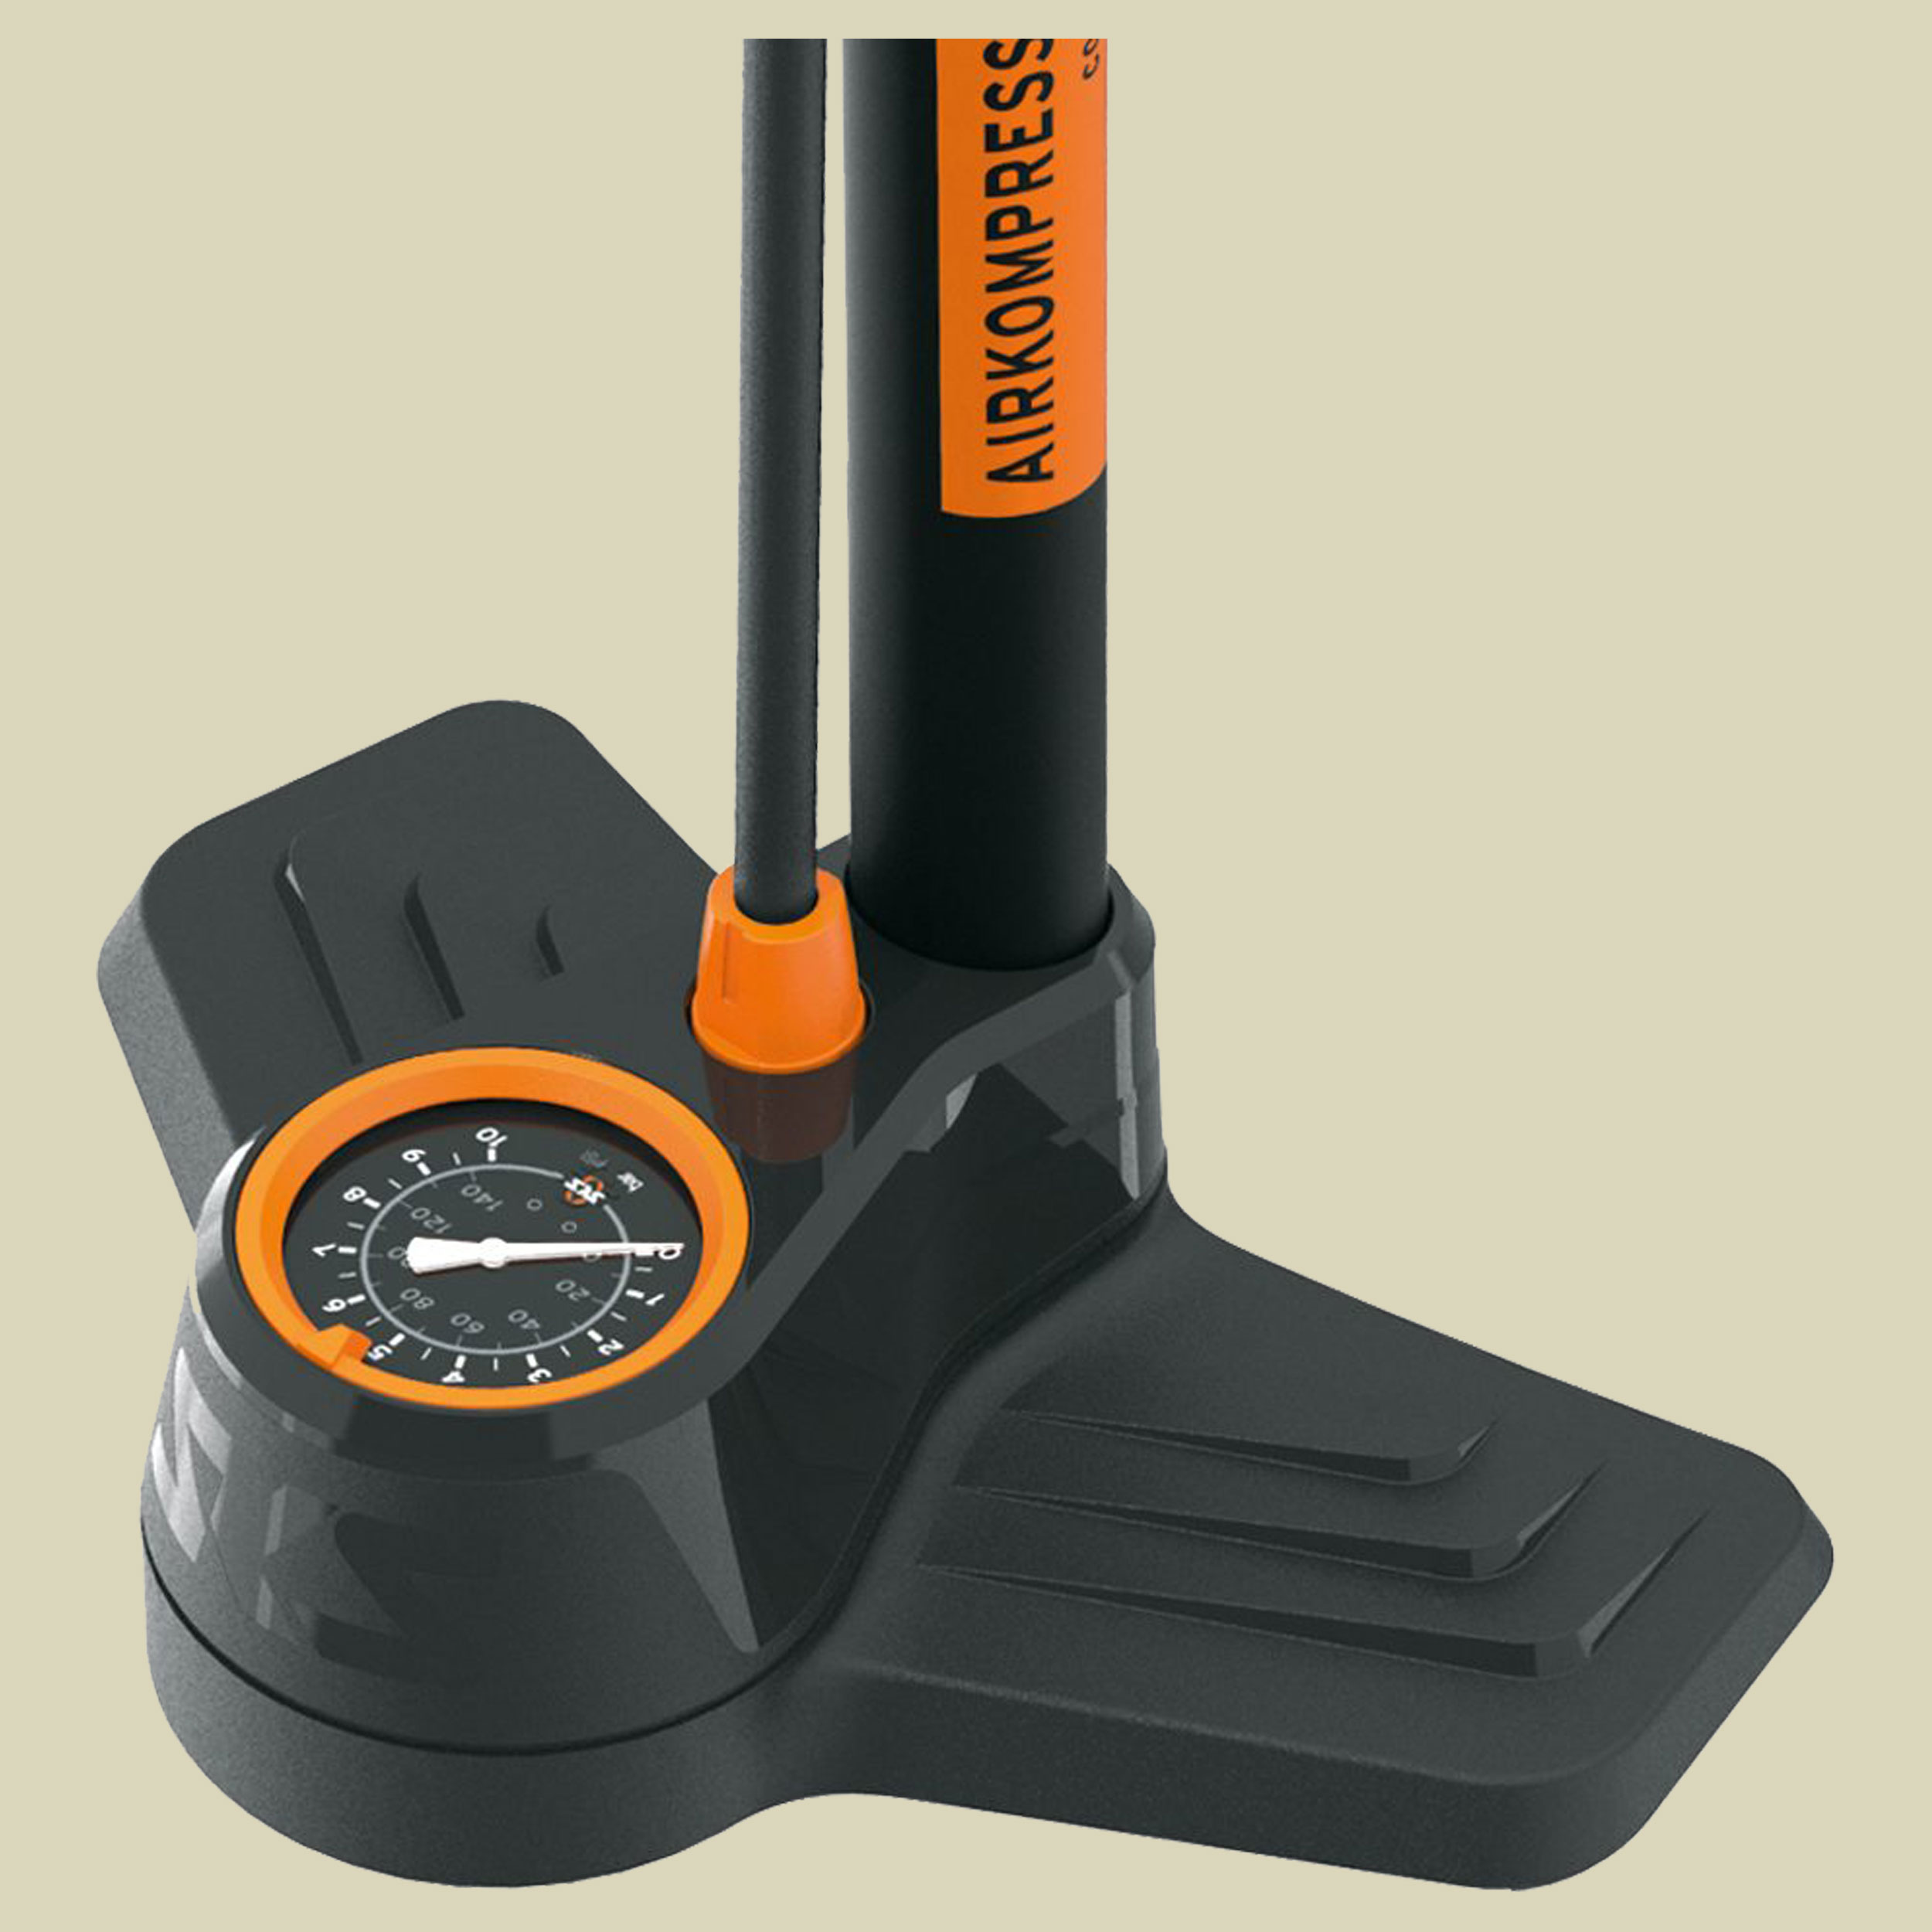 Airkompressor Compact 10.0 Farbe schwarz/orange